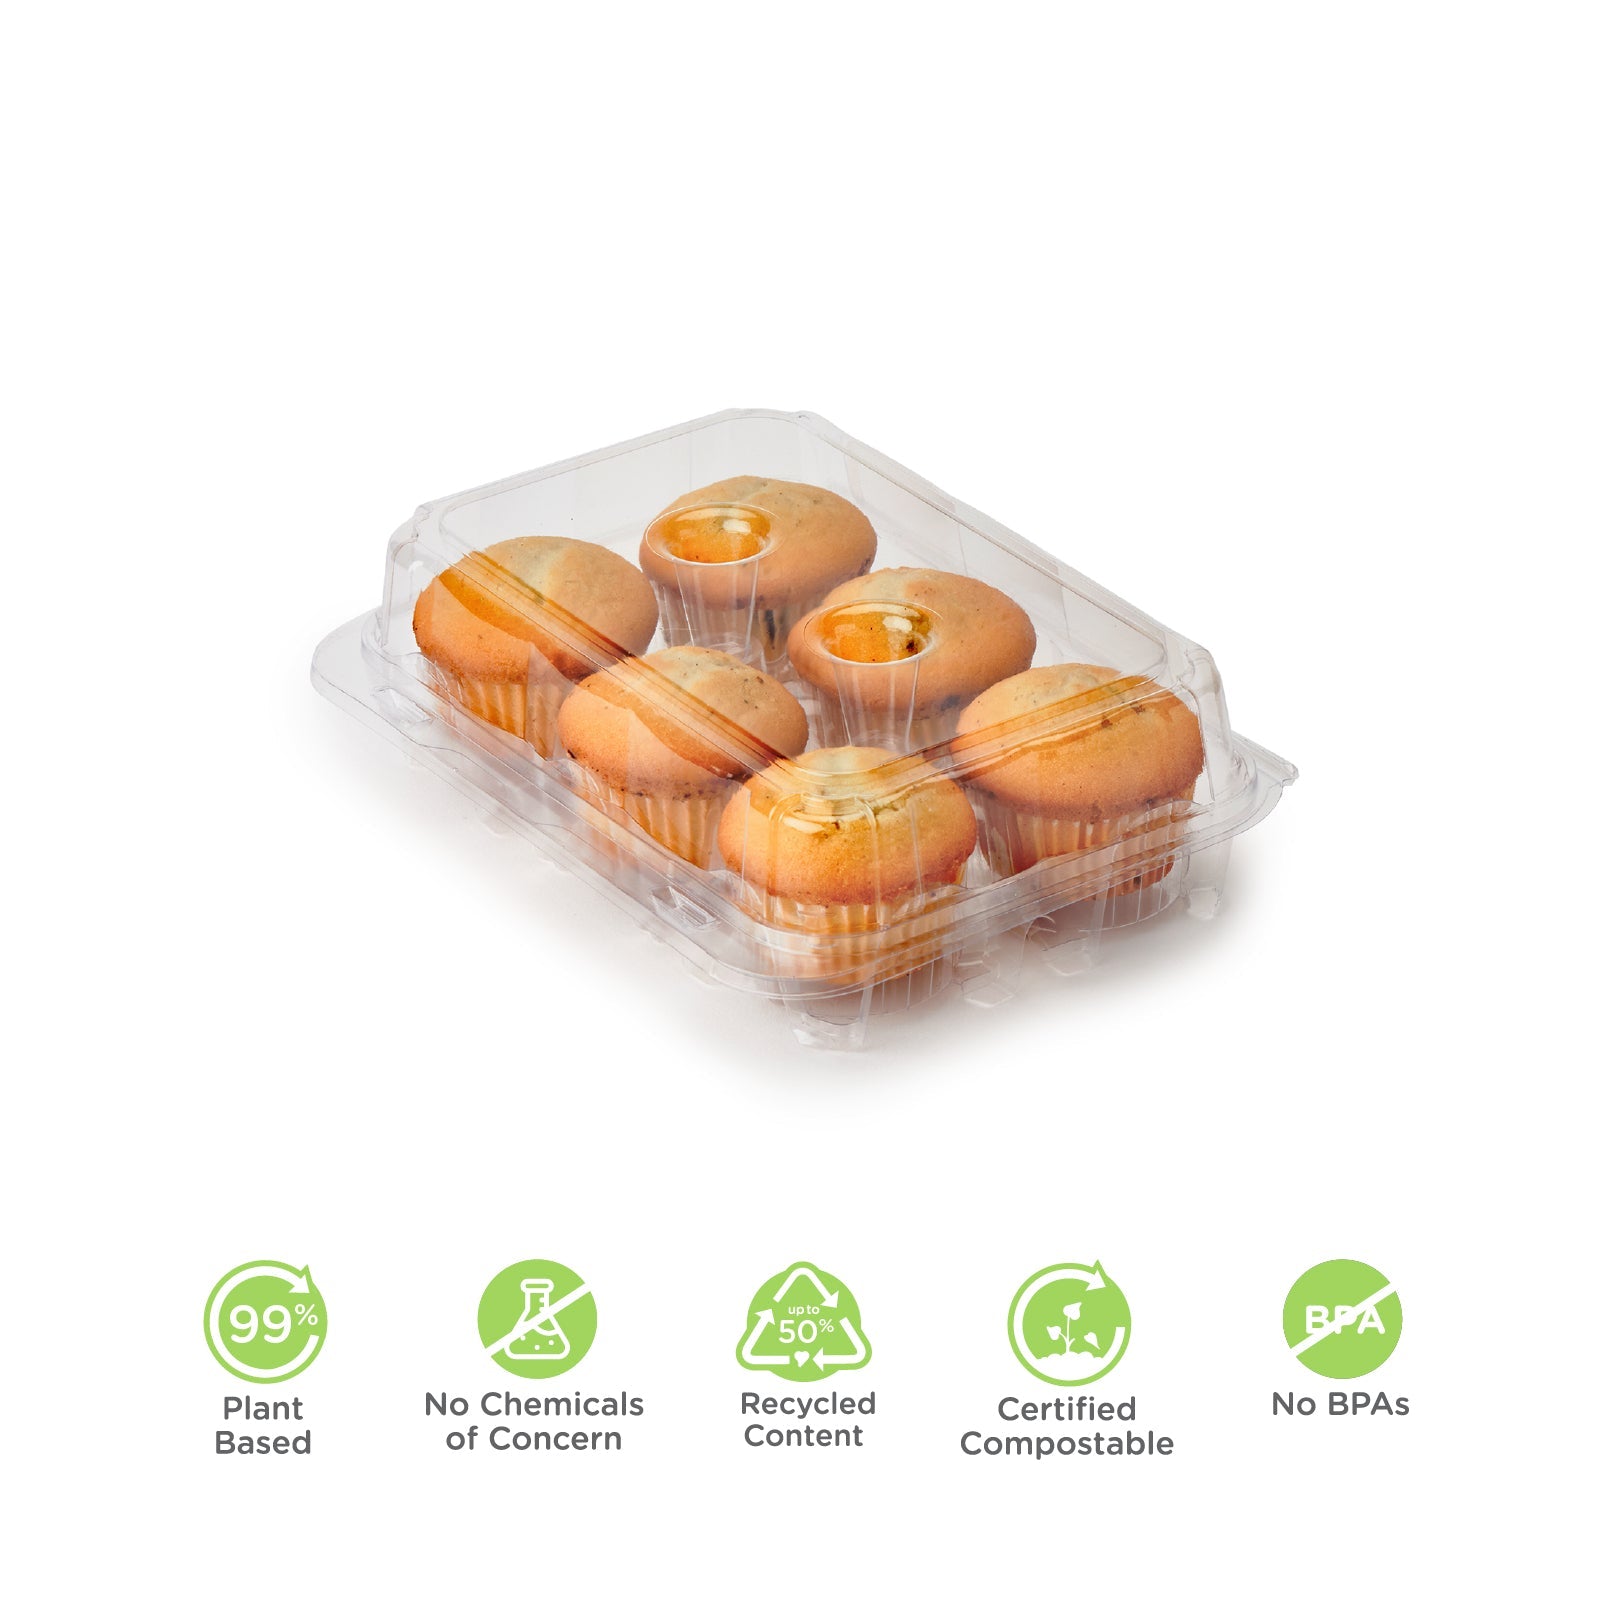 Muffin Fresh: Muffin Storage Container